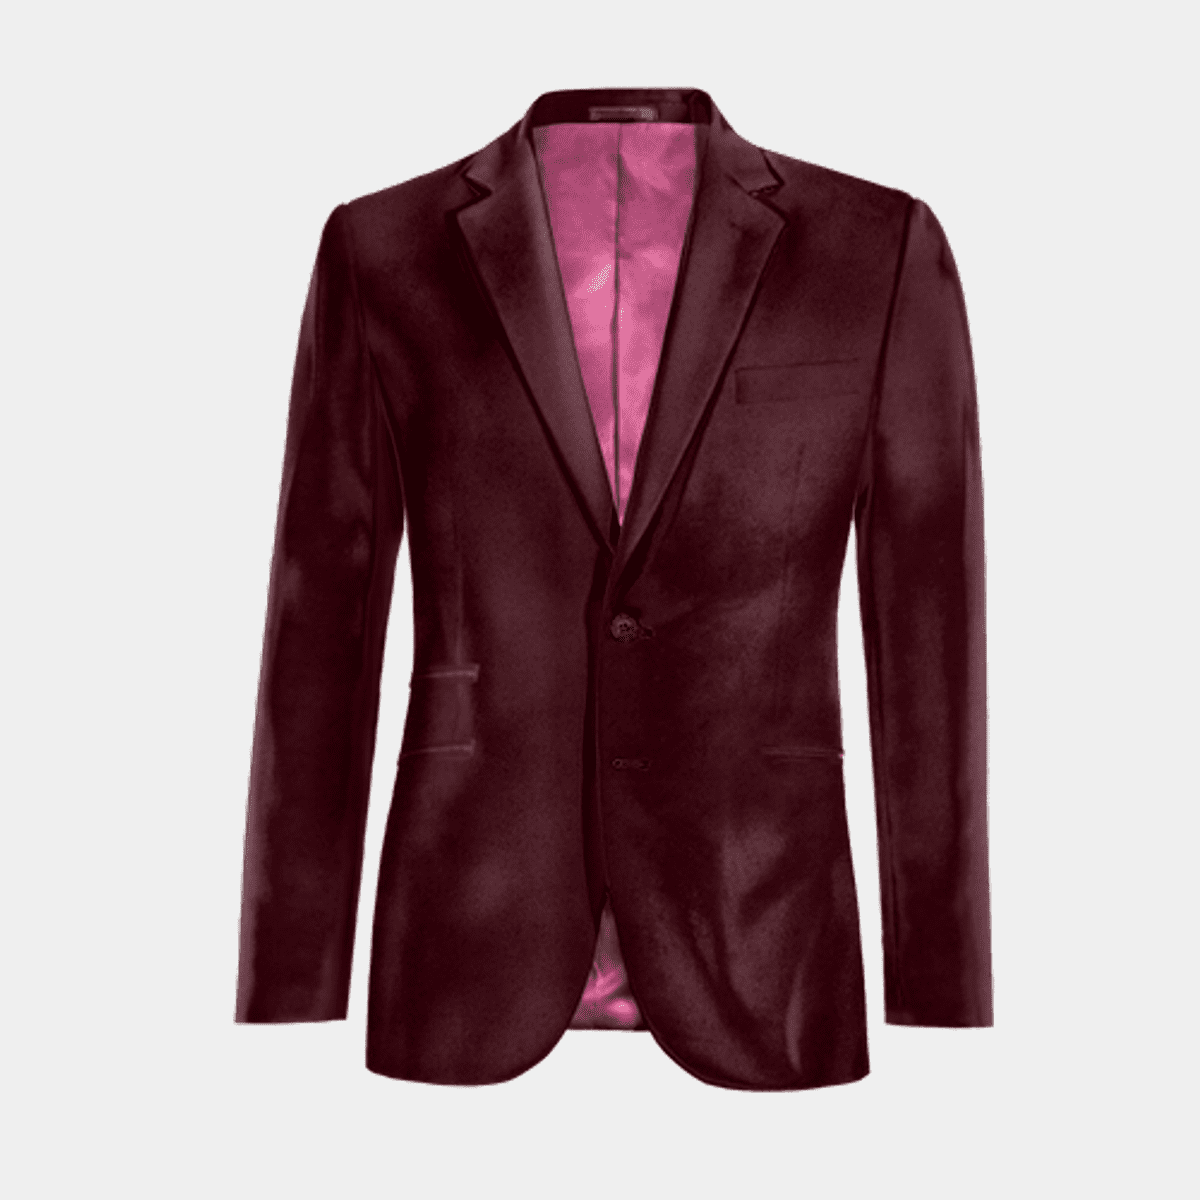 Intense red year-round Suit Jacket